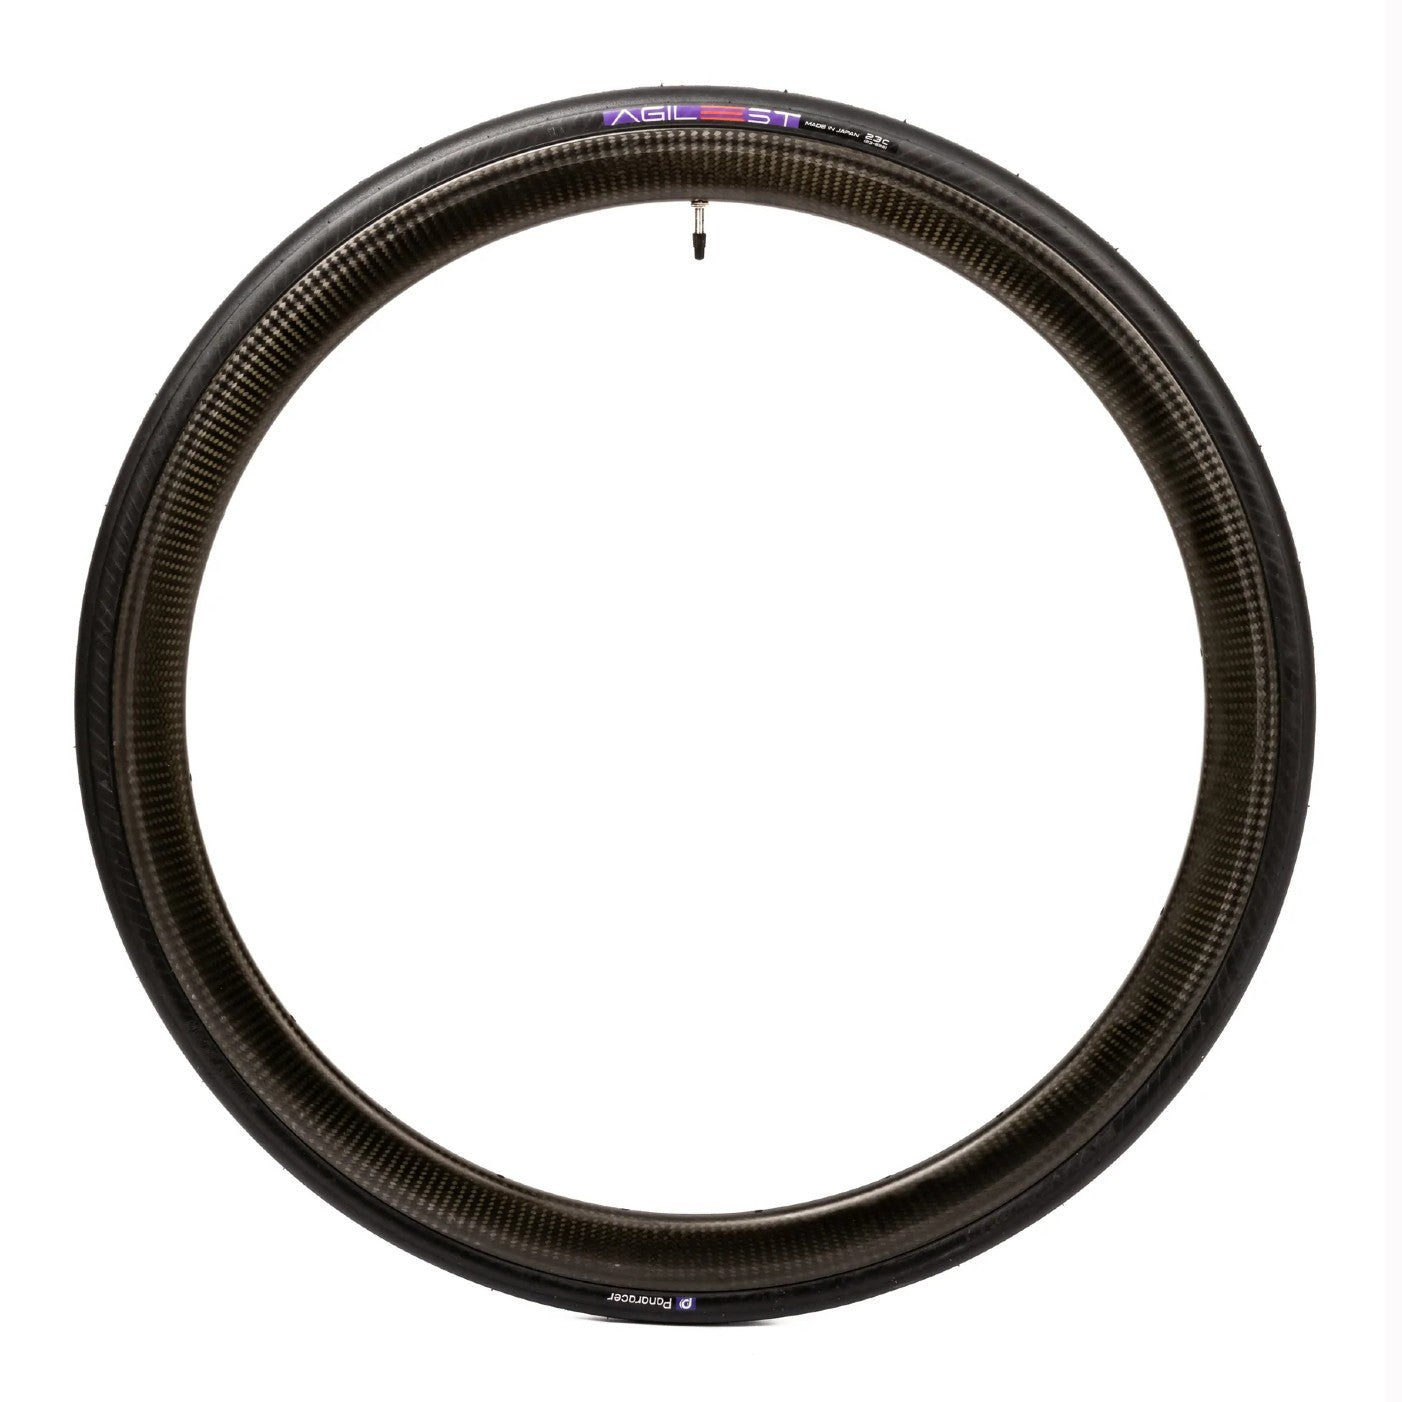 Panaracer Agilest Standard Tough & Supple Road Bike Tire (RF723-AG-A) - Amber (Tan)